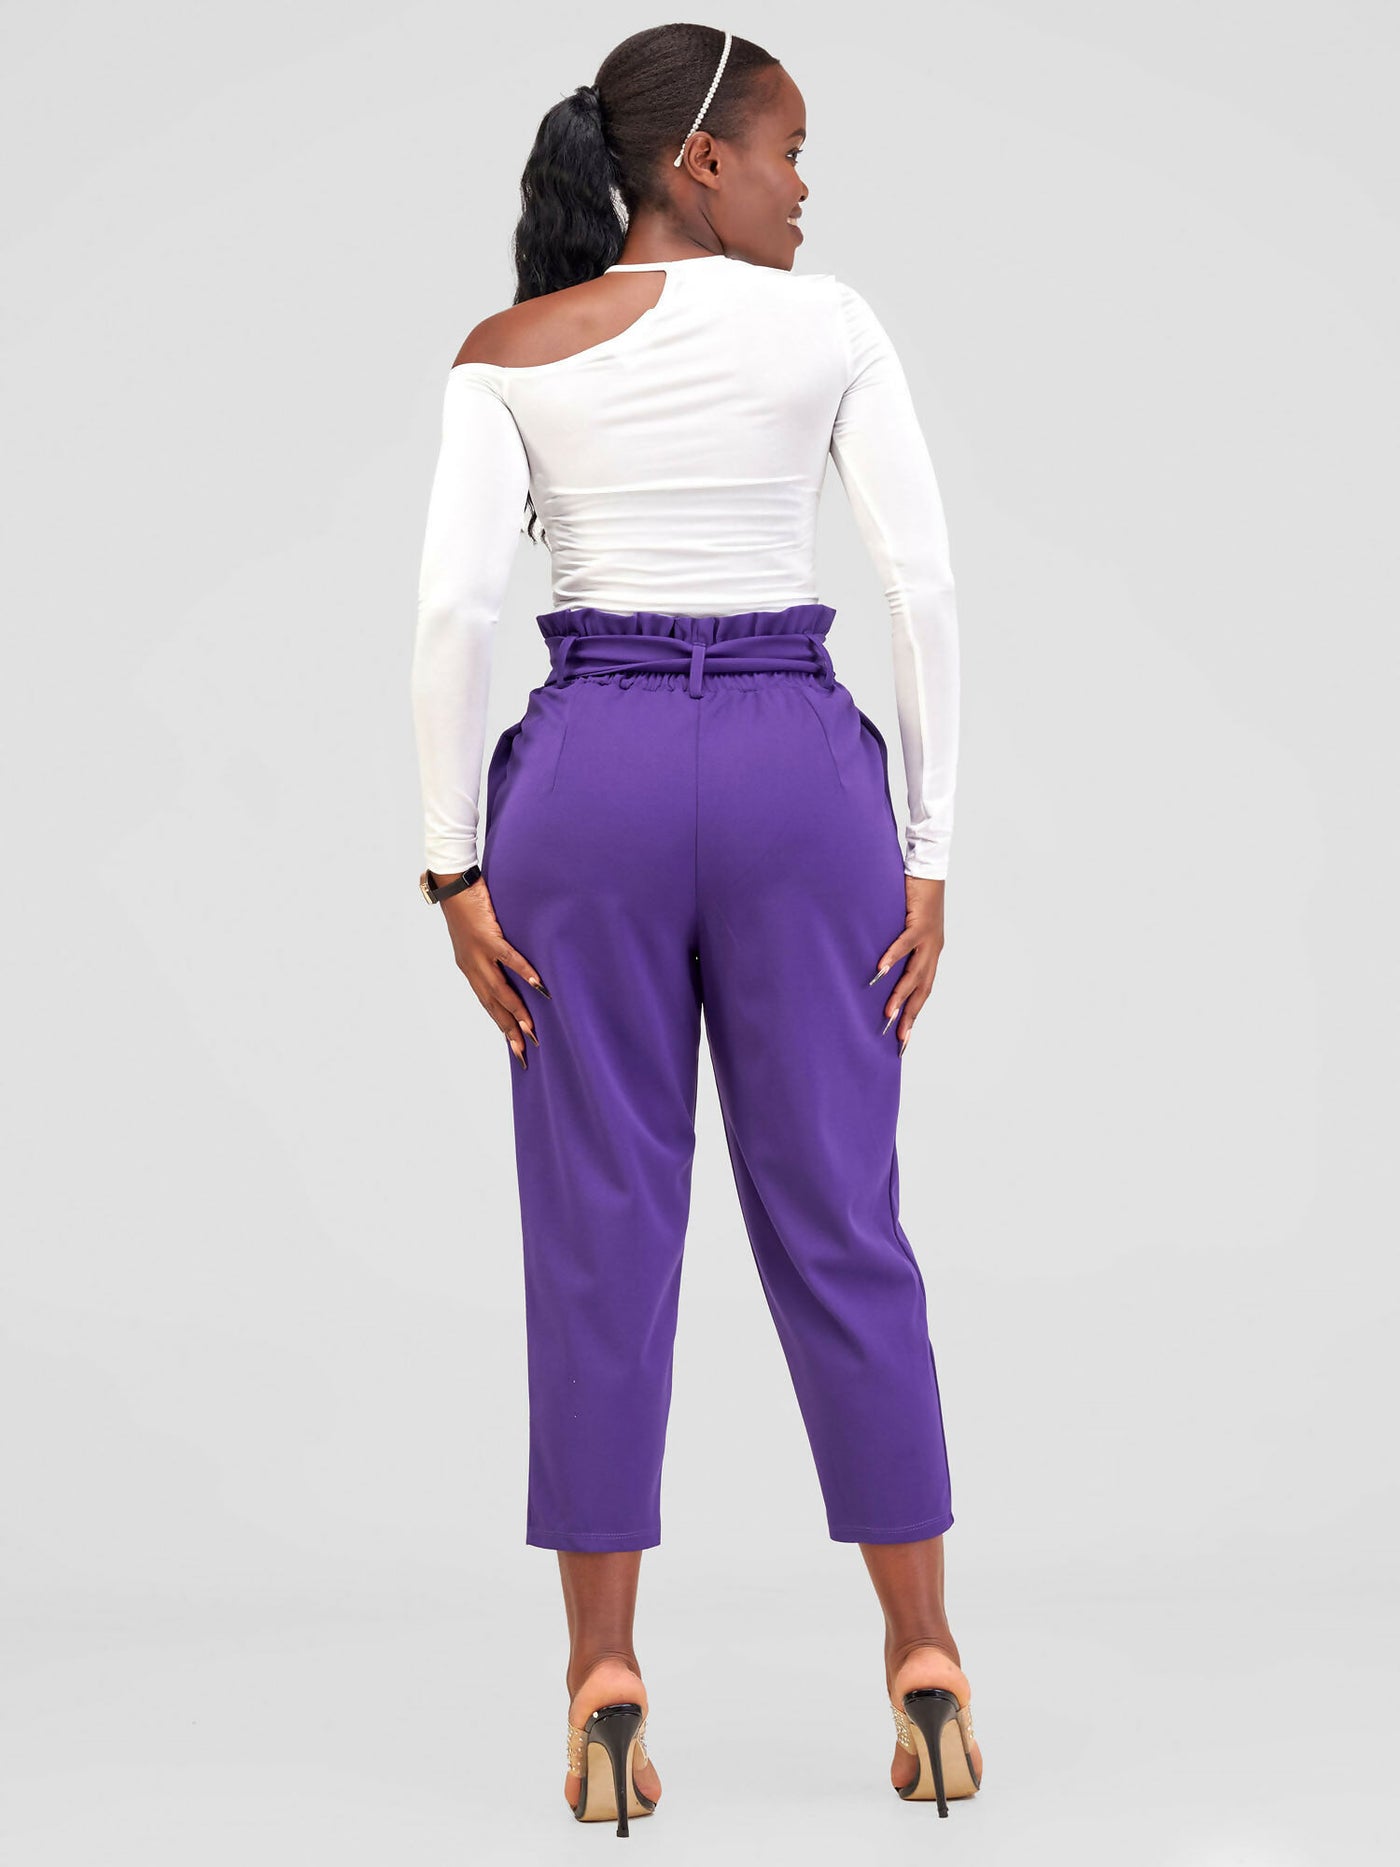 Elsie Glamour Millan Pants - Purple